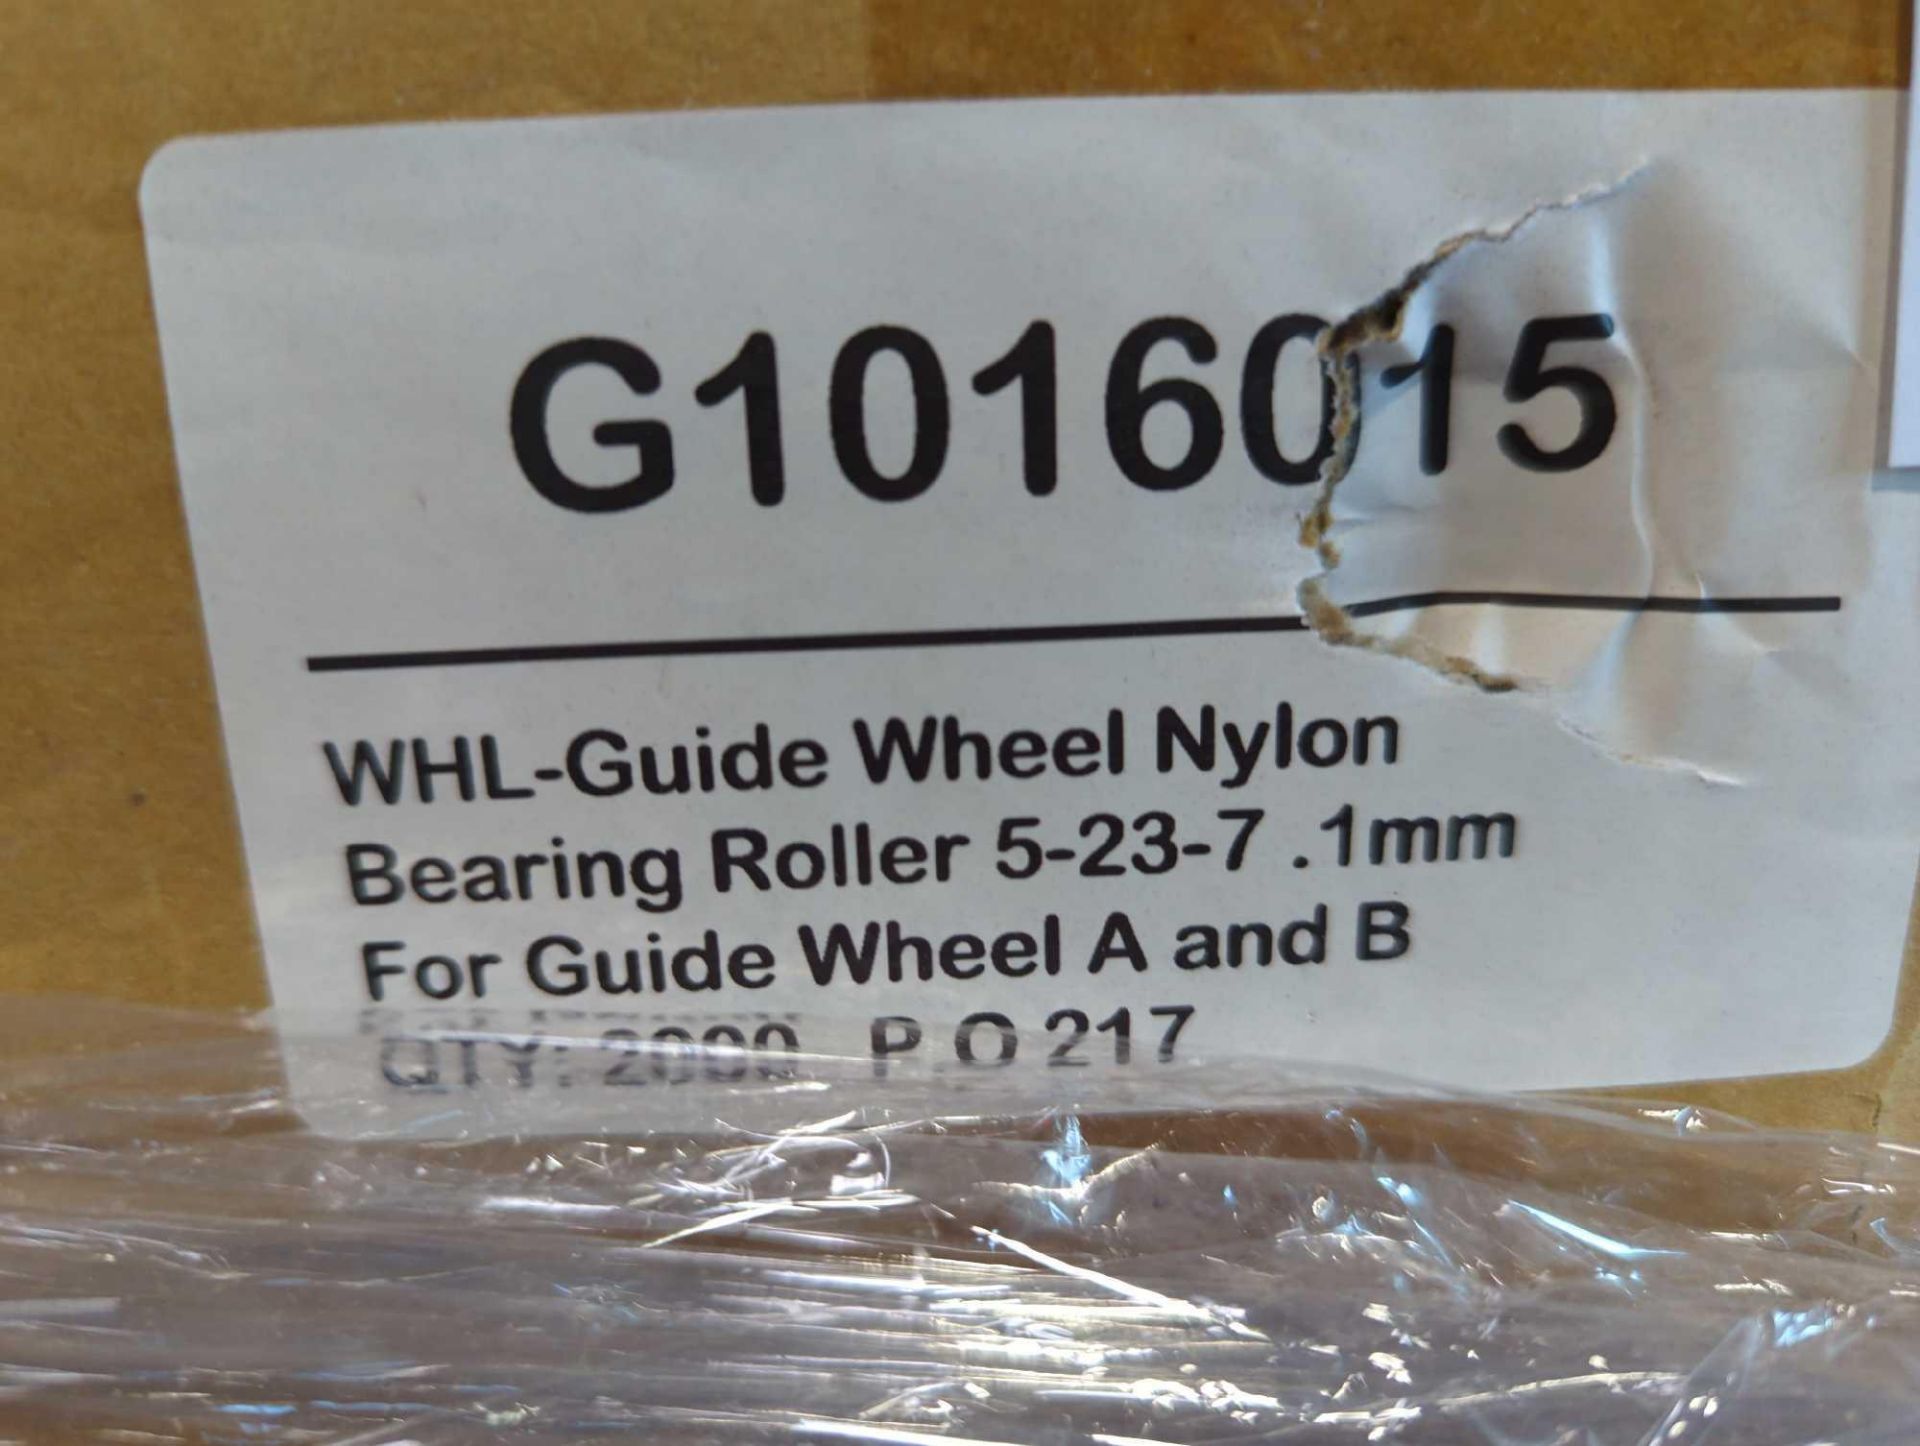 Nylon bearing rollers